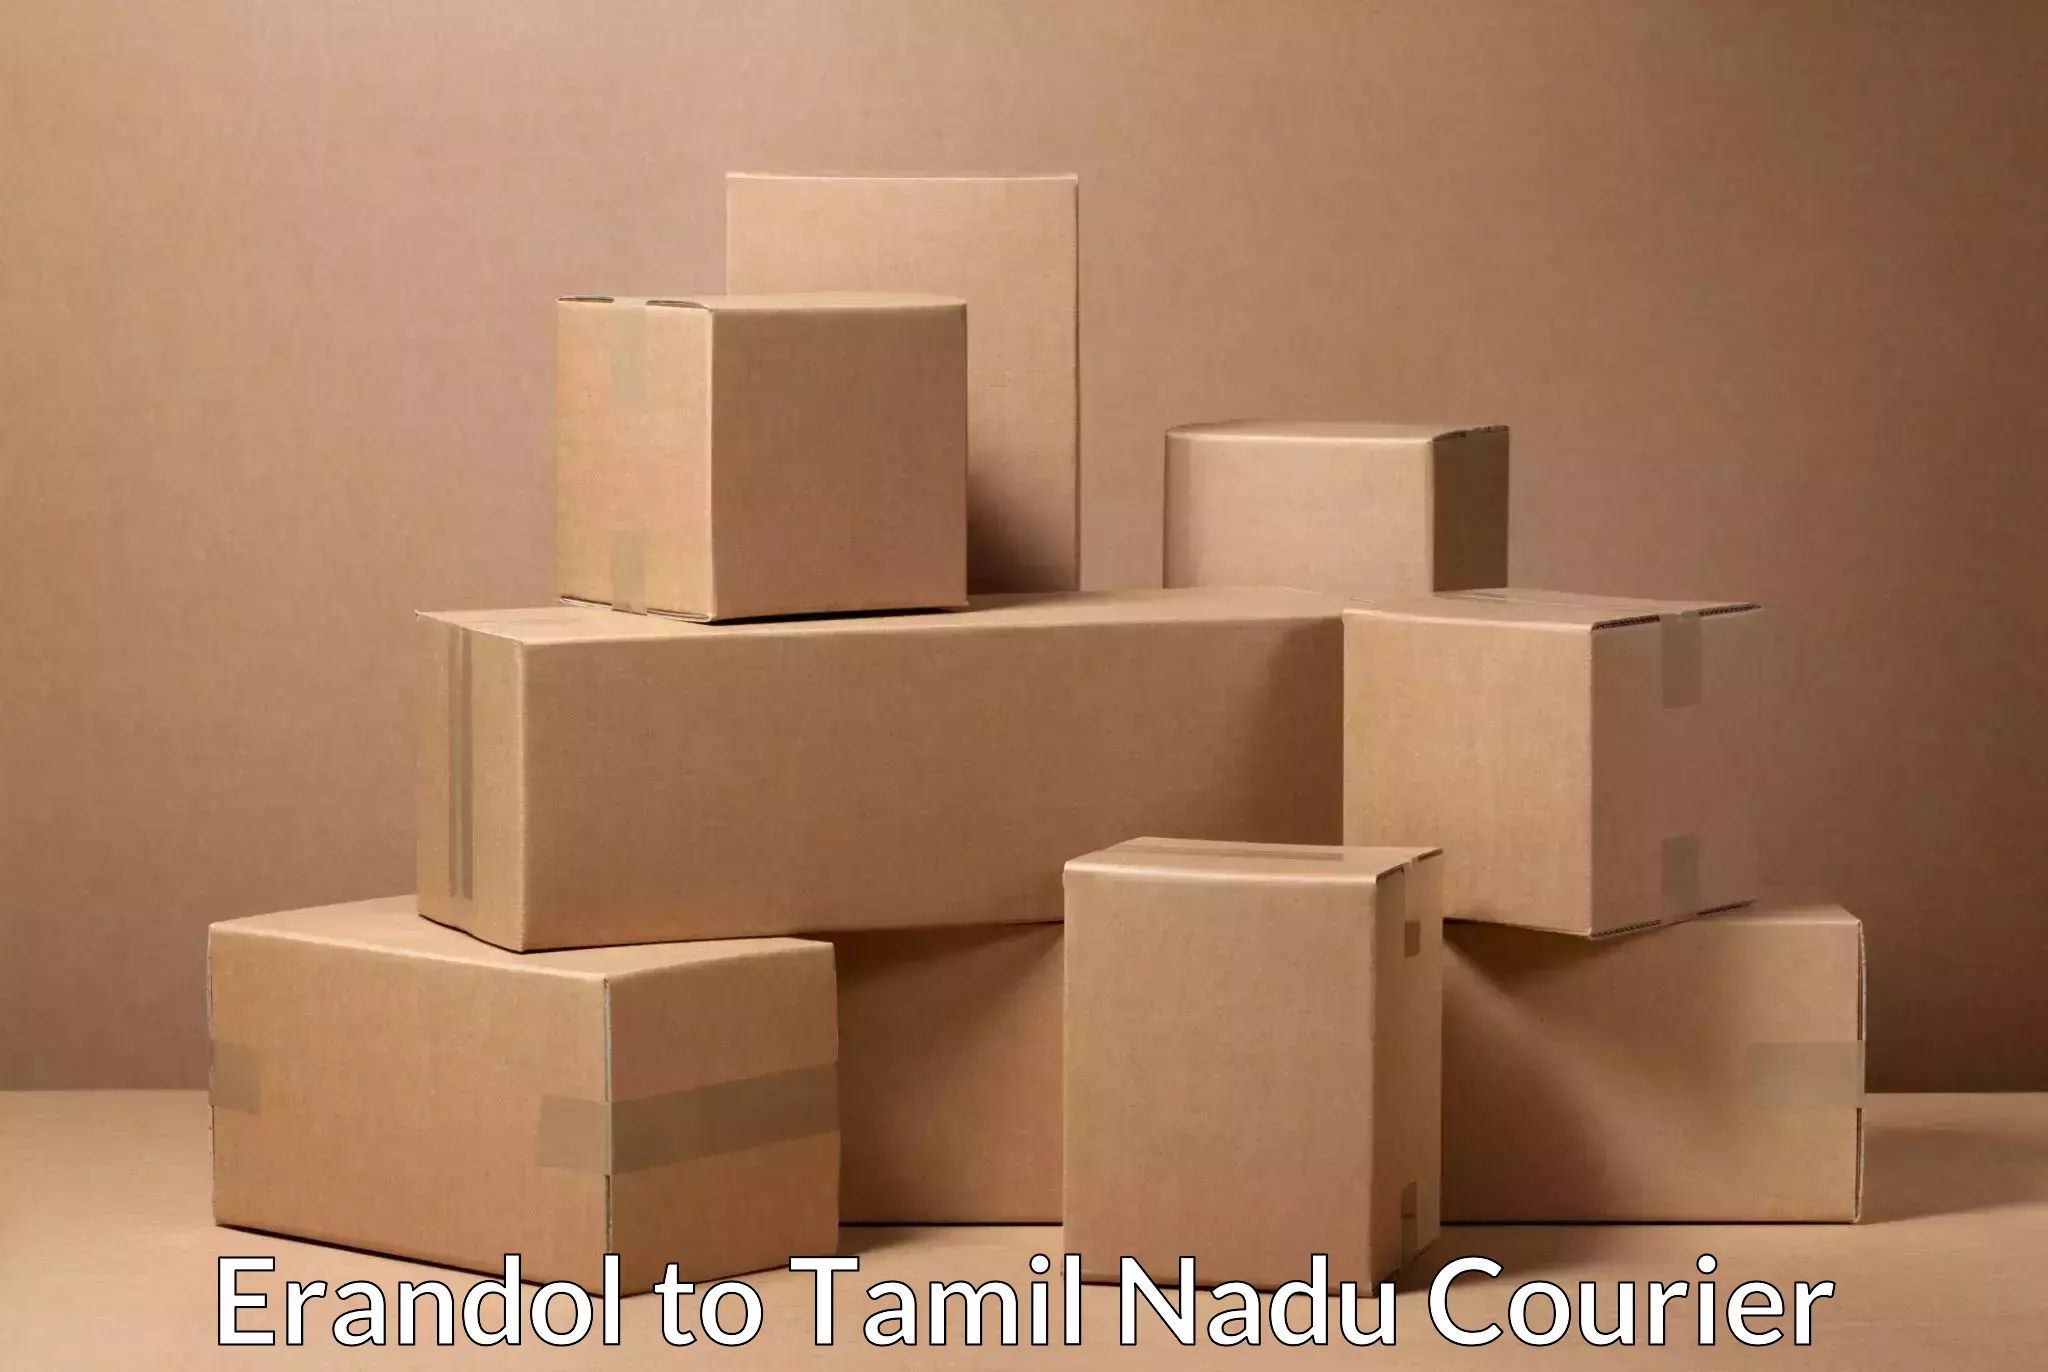 Global courier networks Erandol to Chennai Port